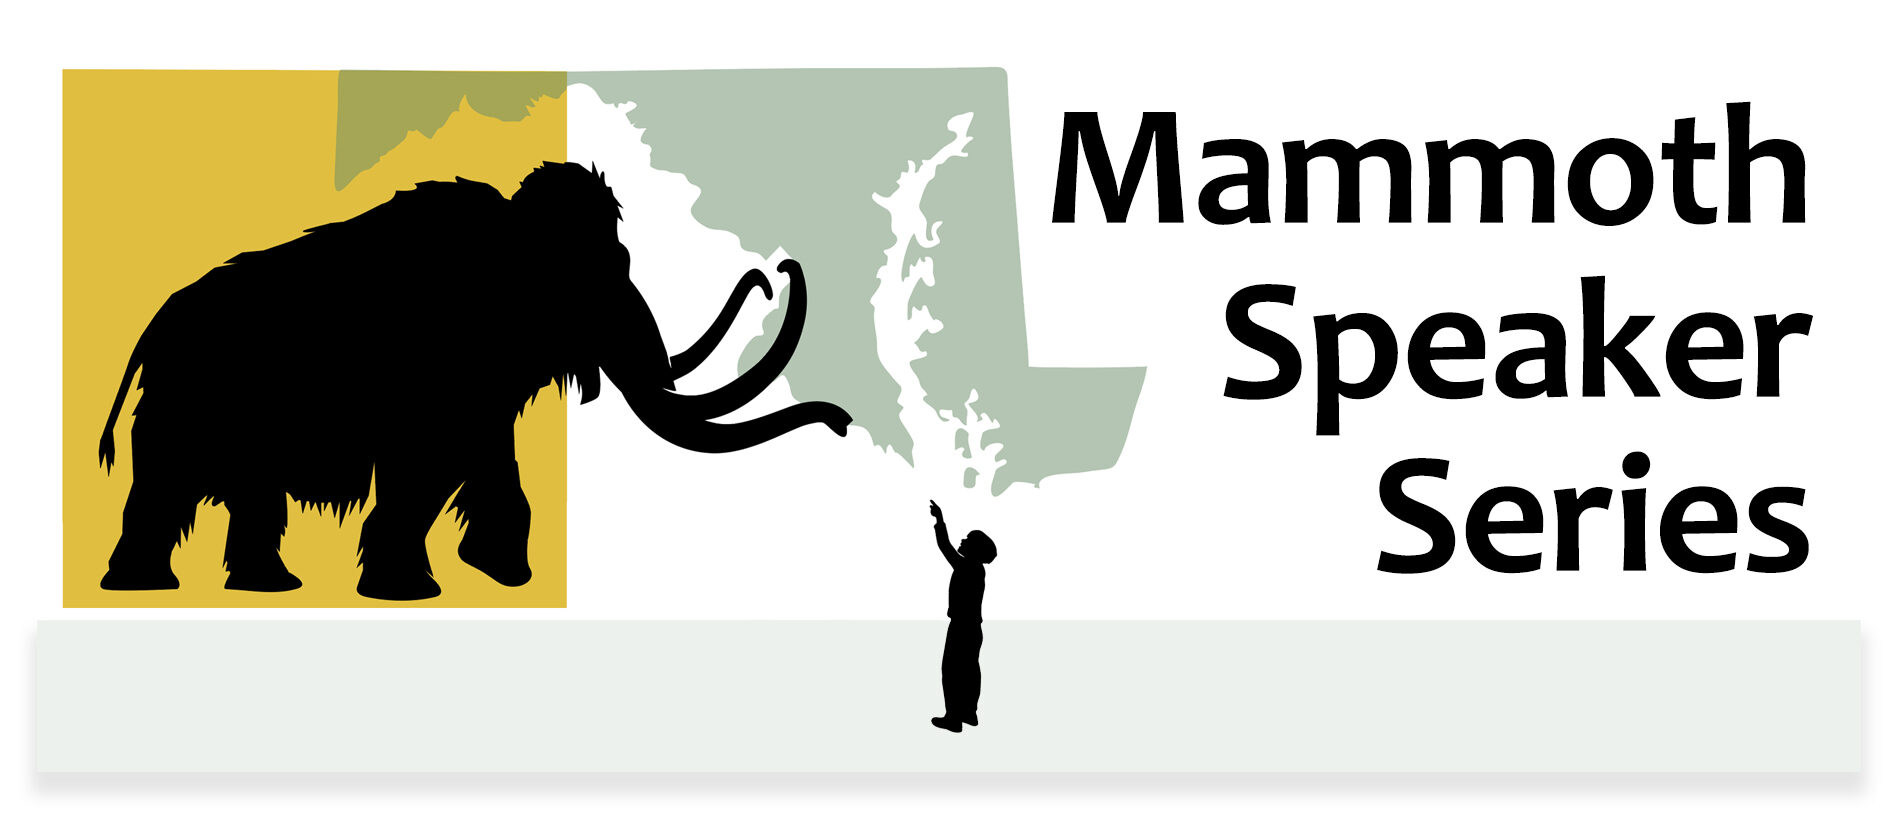 Natural History Society of Maryland - Events